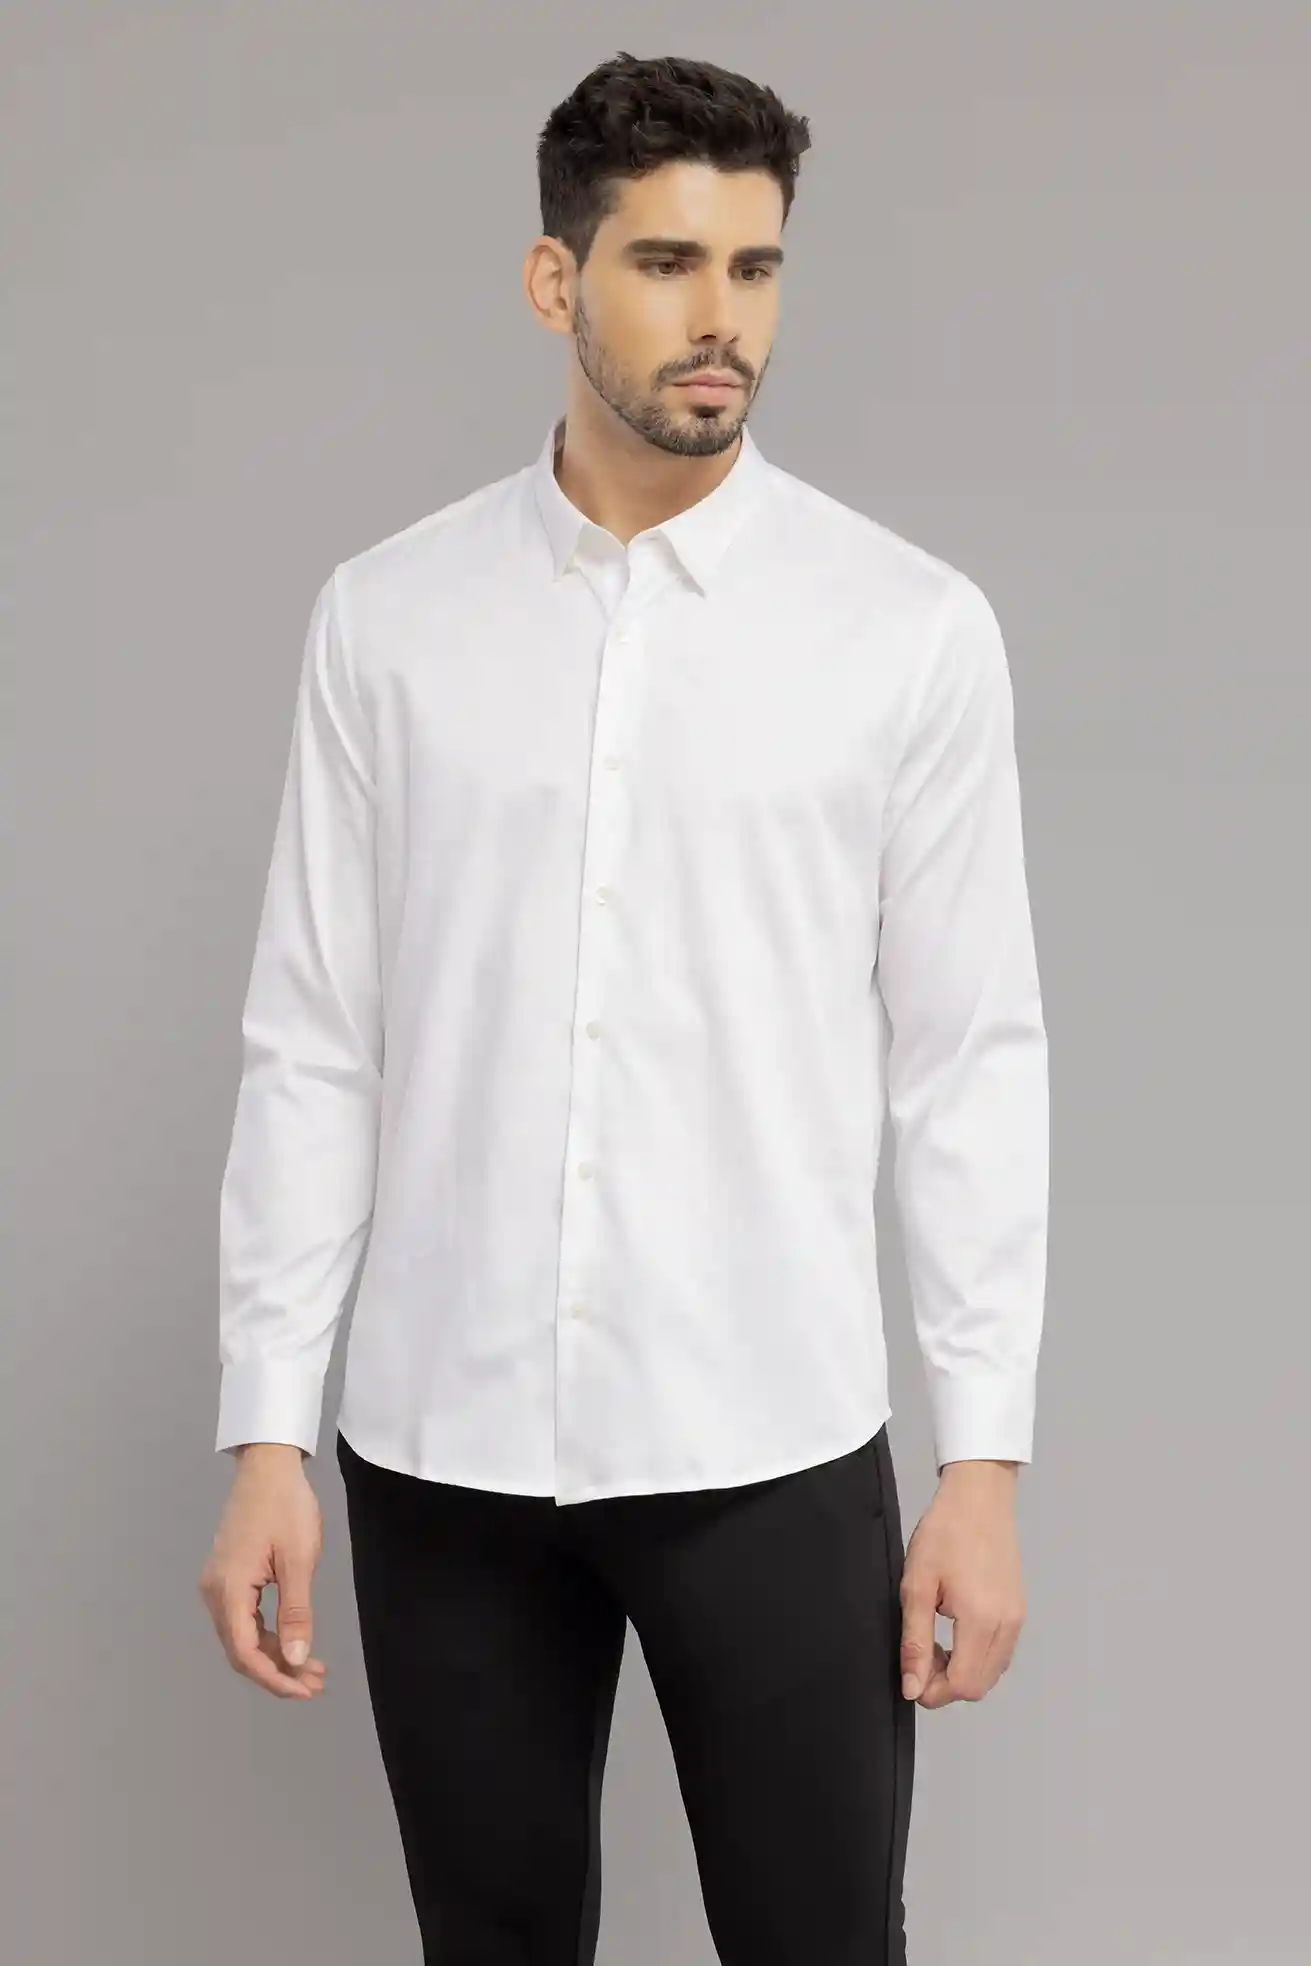 Shop Now: Chantilly Lace White Giza Cotton Shirts Online